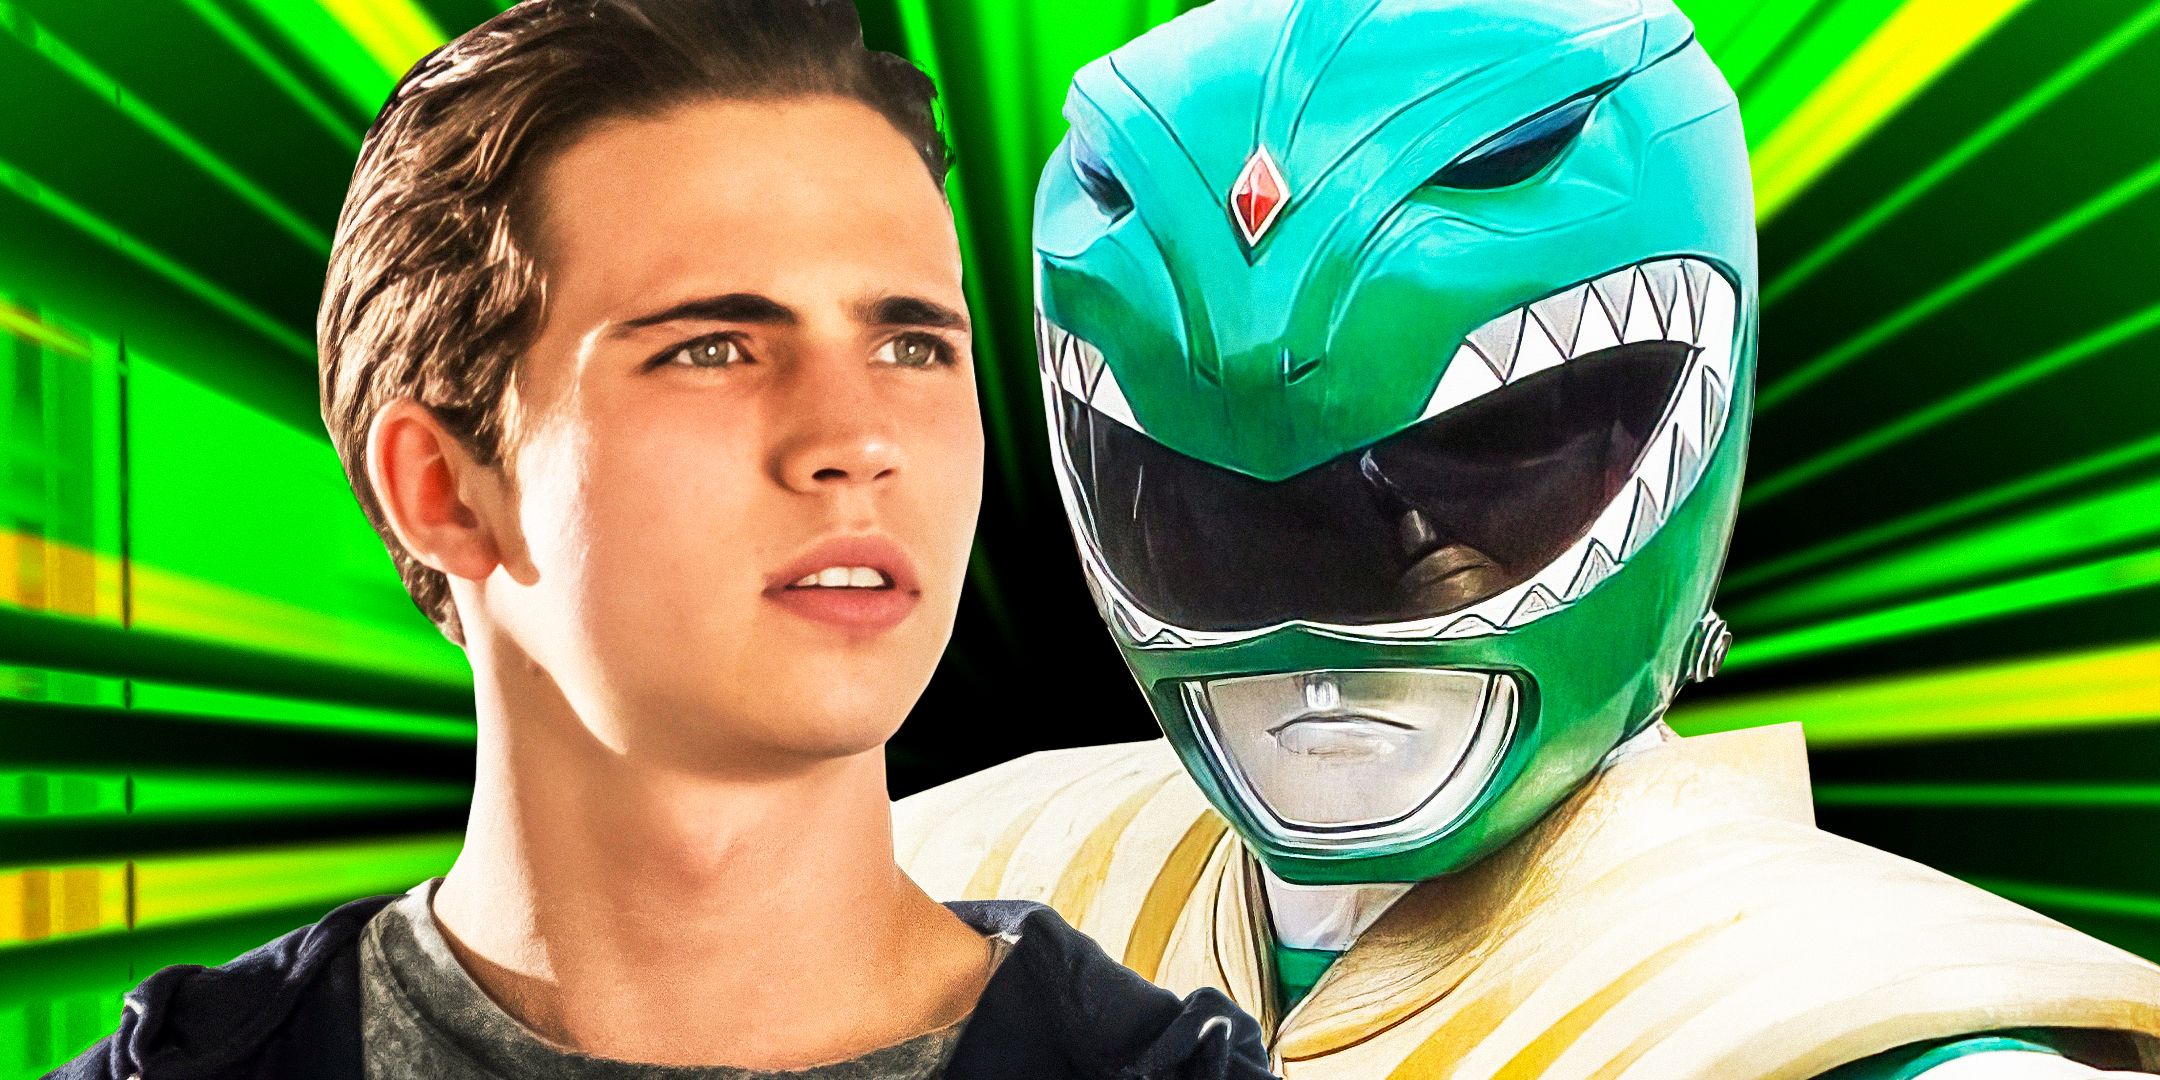 Robby Keene in Cobra Kai and the Mighty Morphin Green Ranger